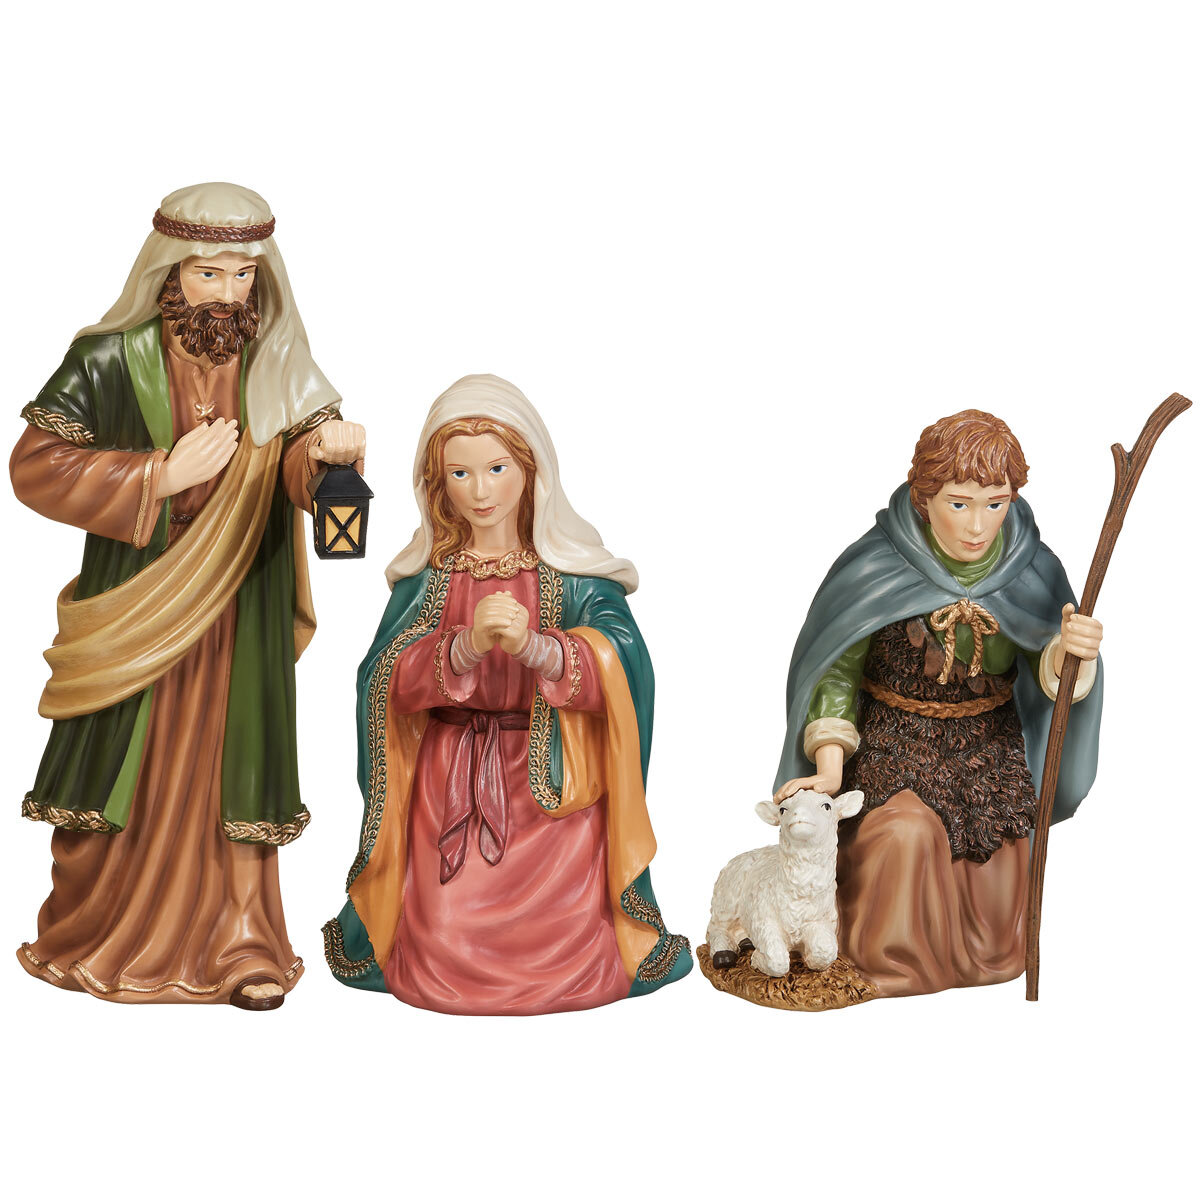 Buy KS Nativity Set Group2 Image at Costco.co.uk